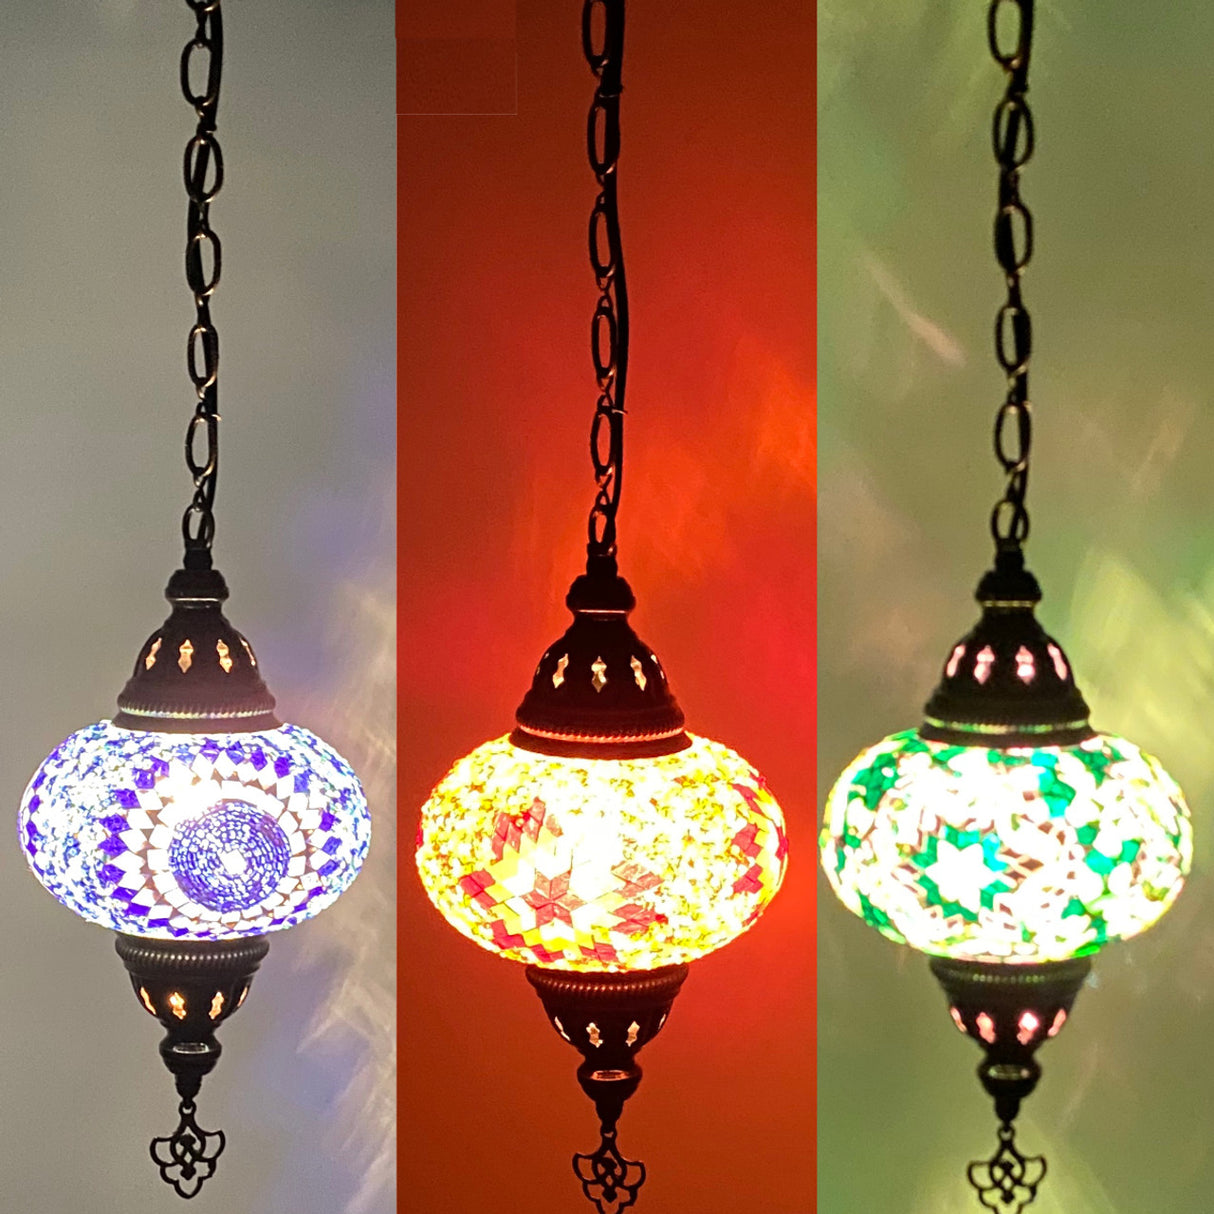 Turkish Mosaic Lantern Hanging Single Chain B3S - 6"x24" - B3S - Assorted Colors